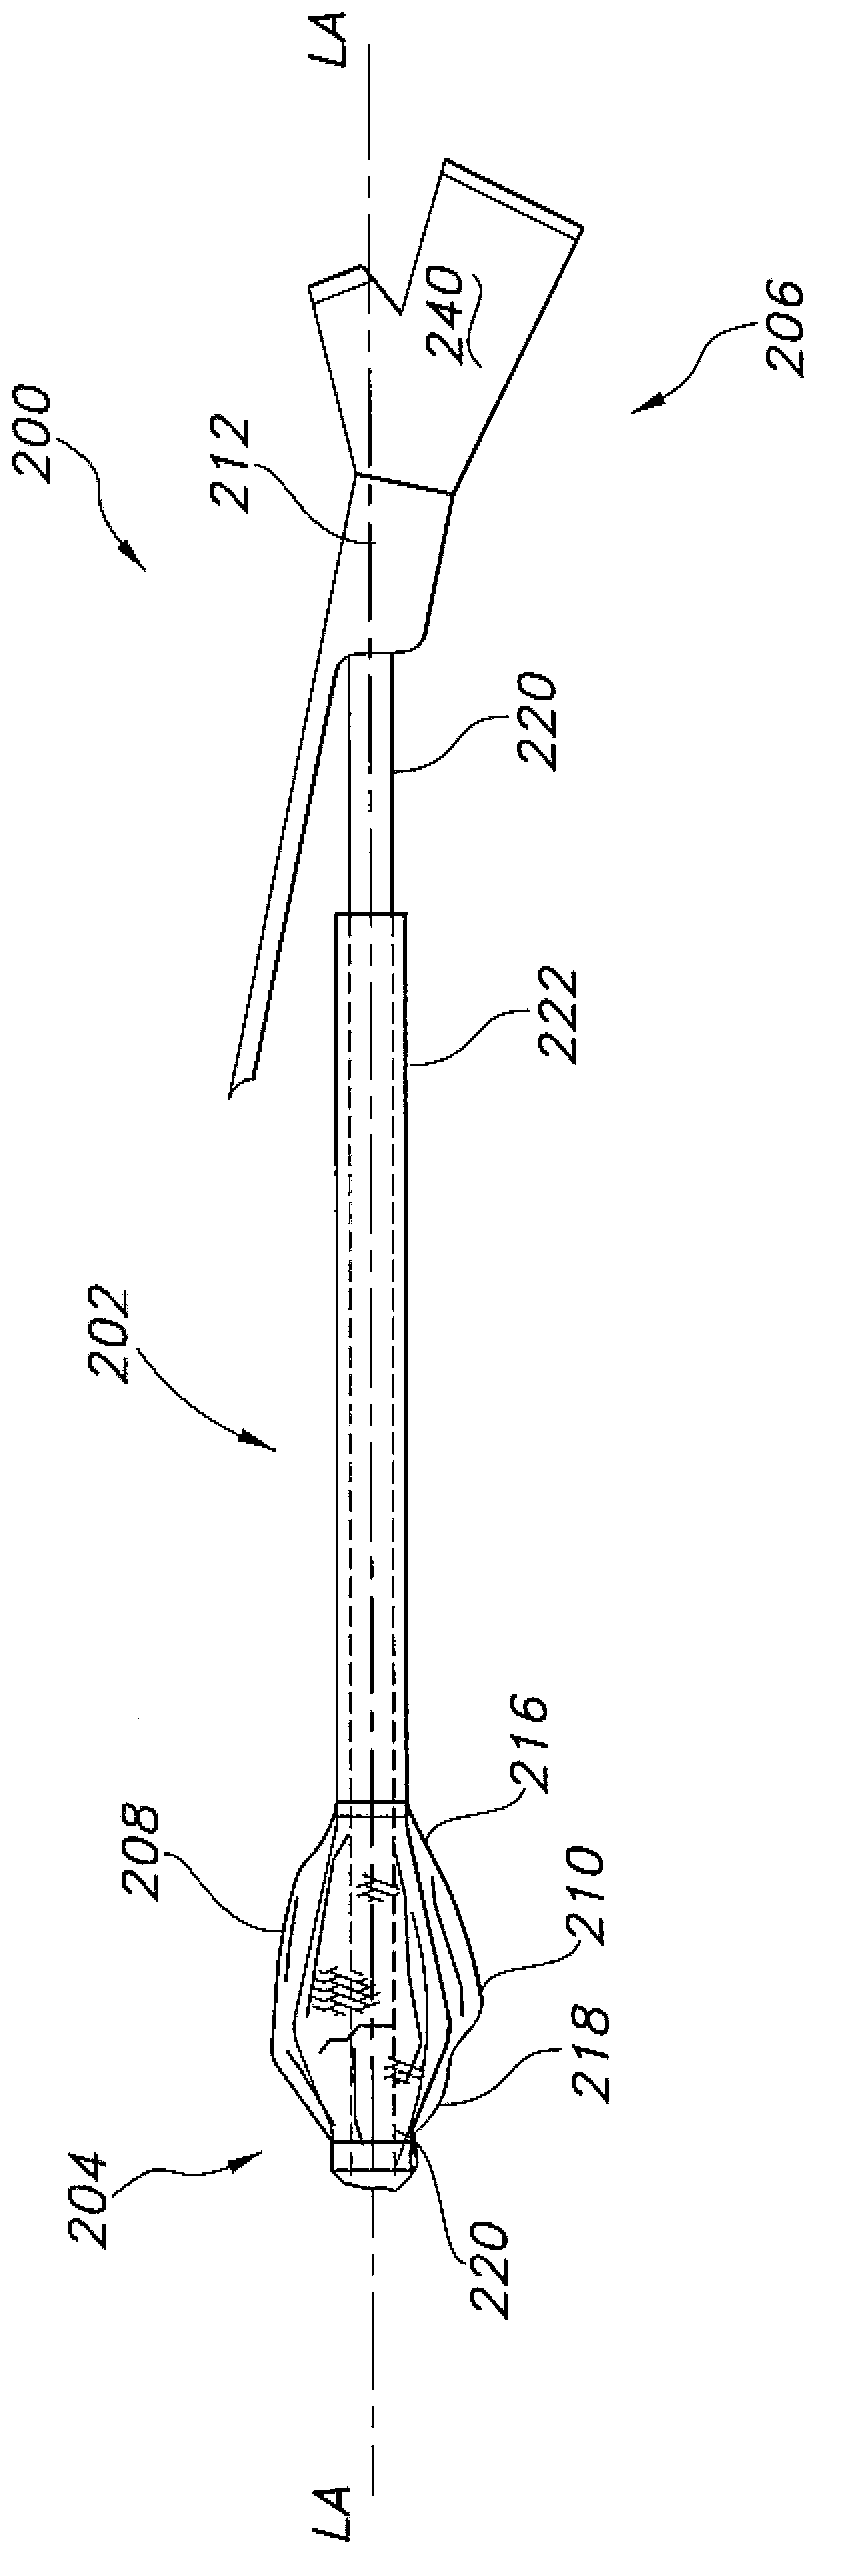 Configurable percutaneous endoscopic gastrostomy tube